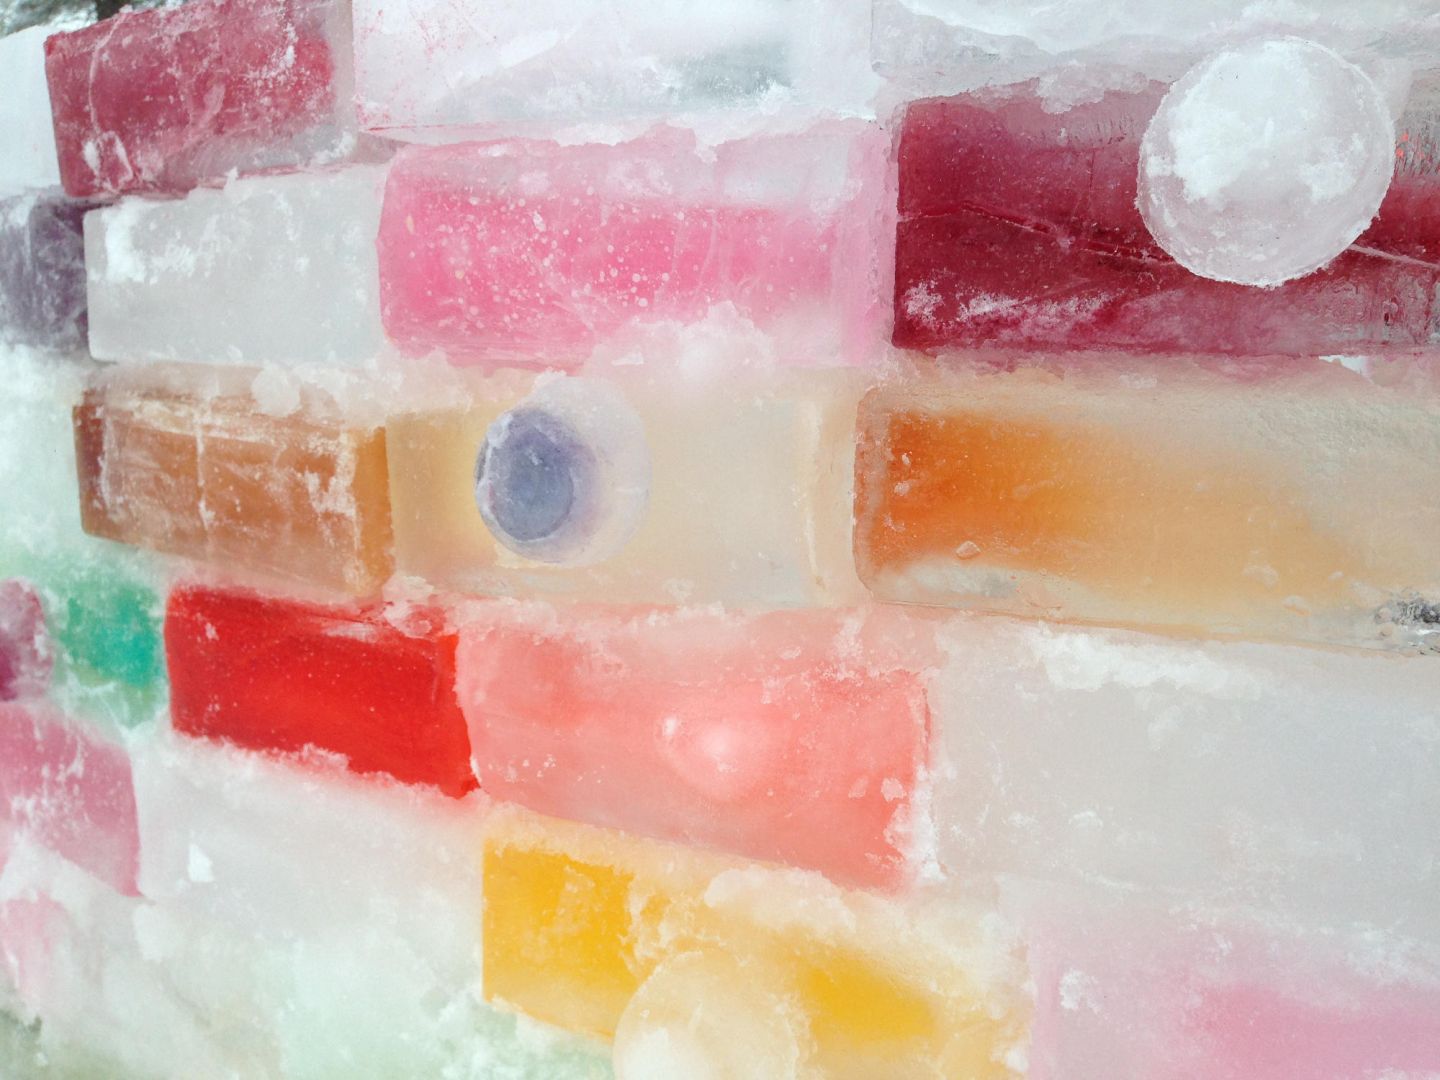 Colored bricks made of ice